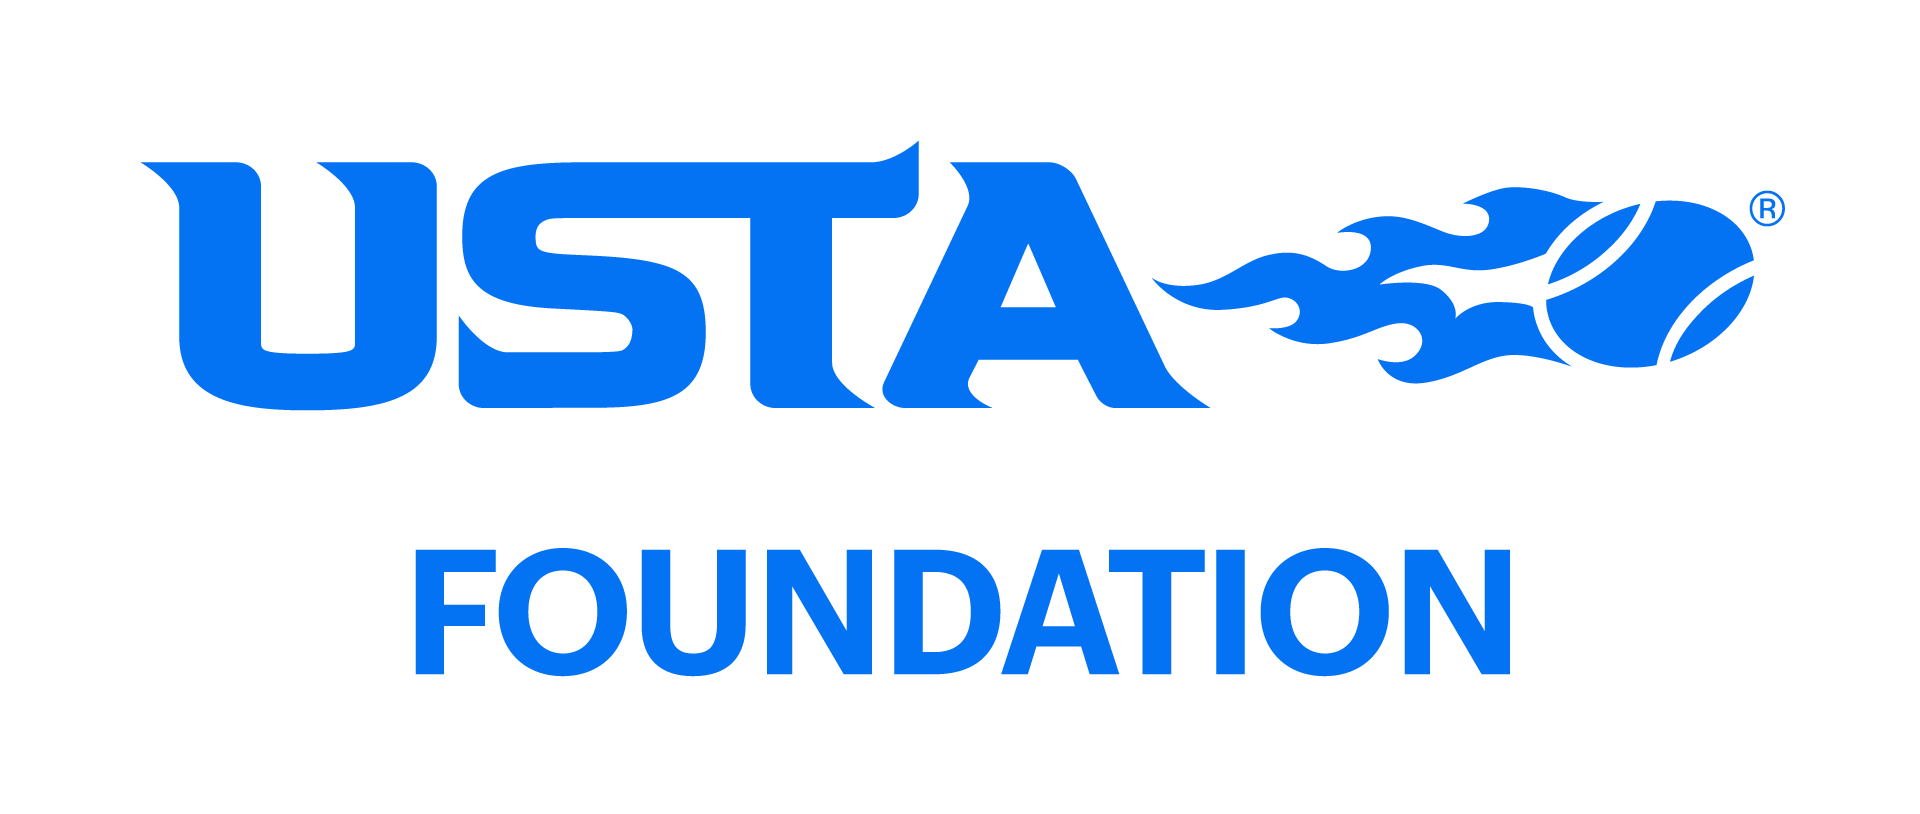 USTA-Foundation_USTABlue-RGB-stacked.png